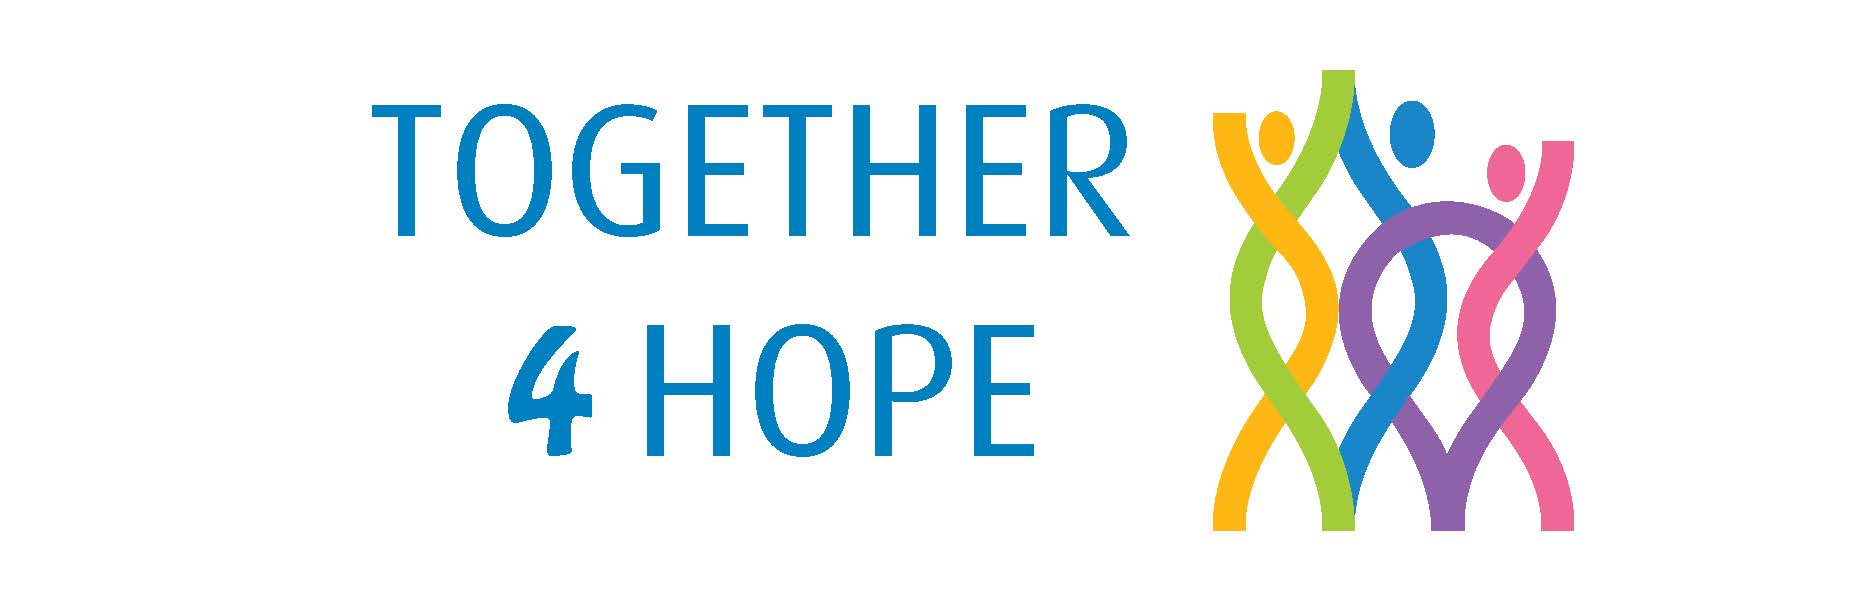 Together 4 Hope Suicide Prevention Initiatives logo